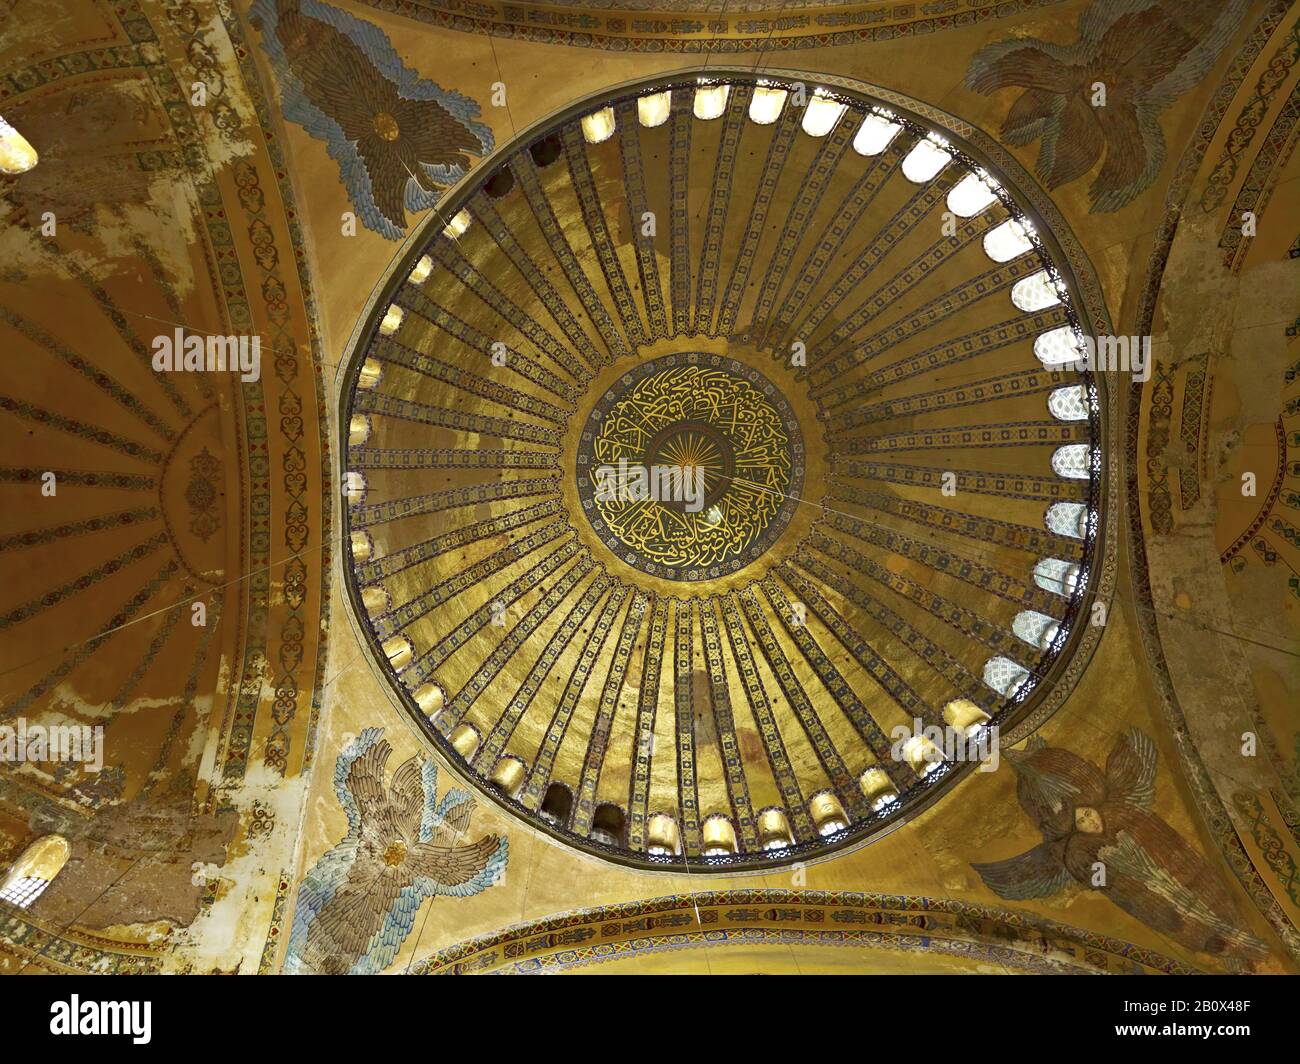 Dome of Hagia Sophia, Istanbul, Turkey, Stock Photo